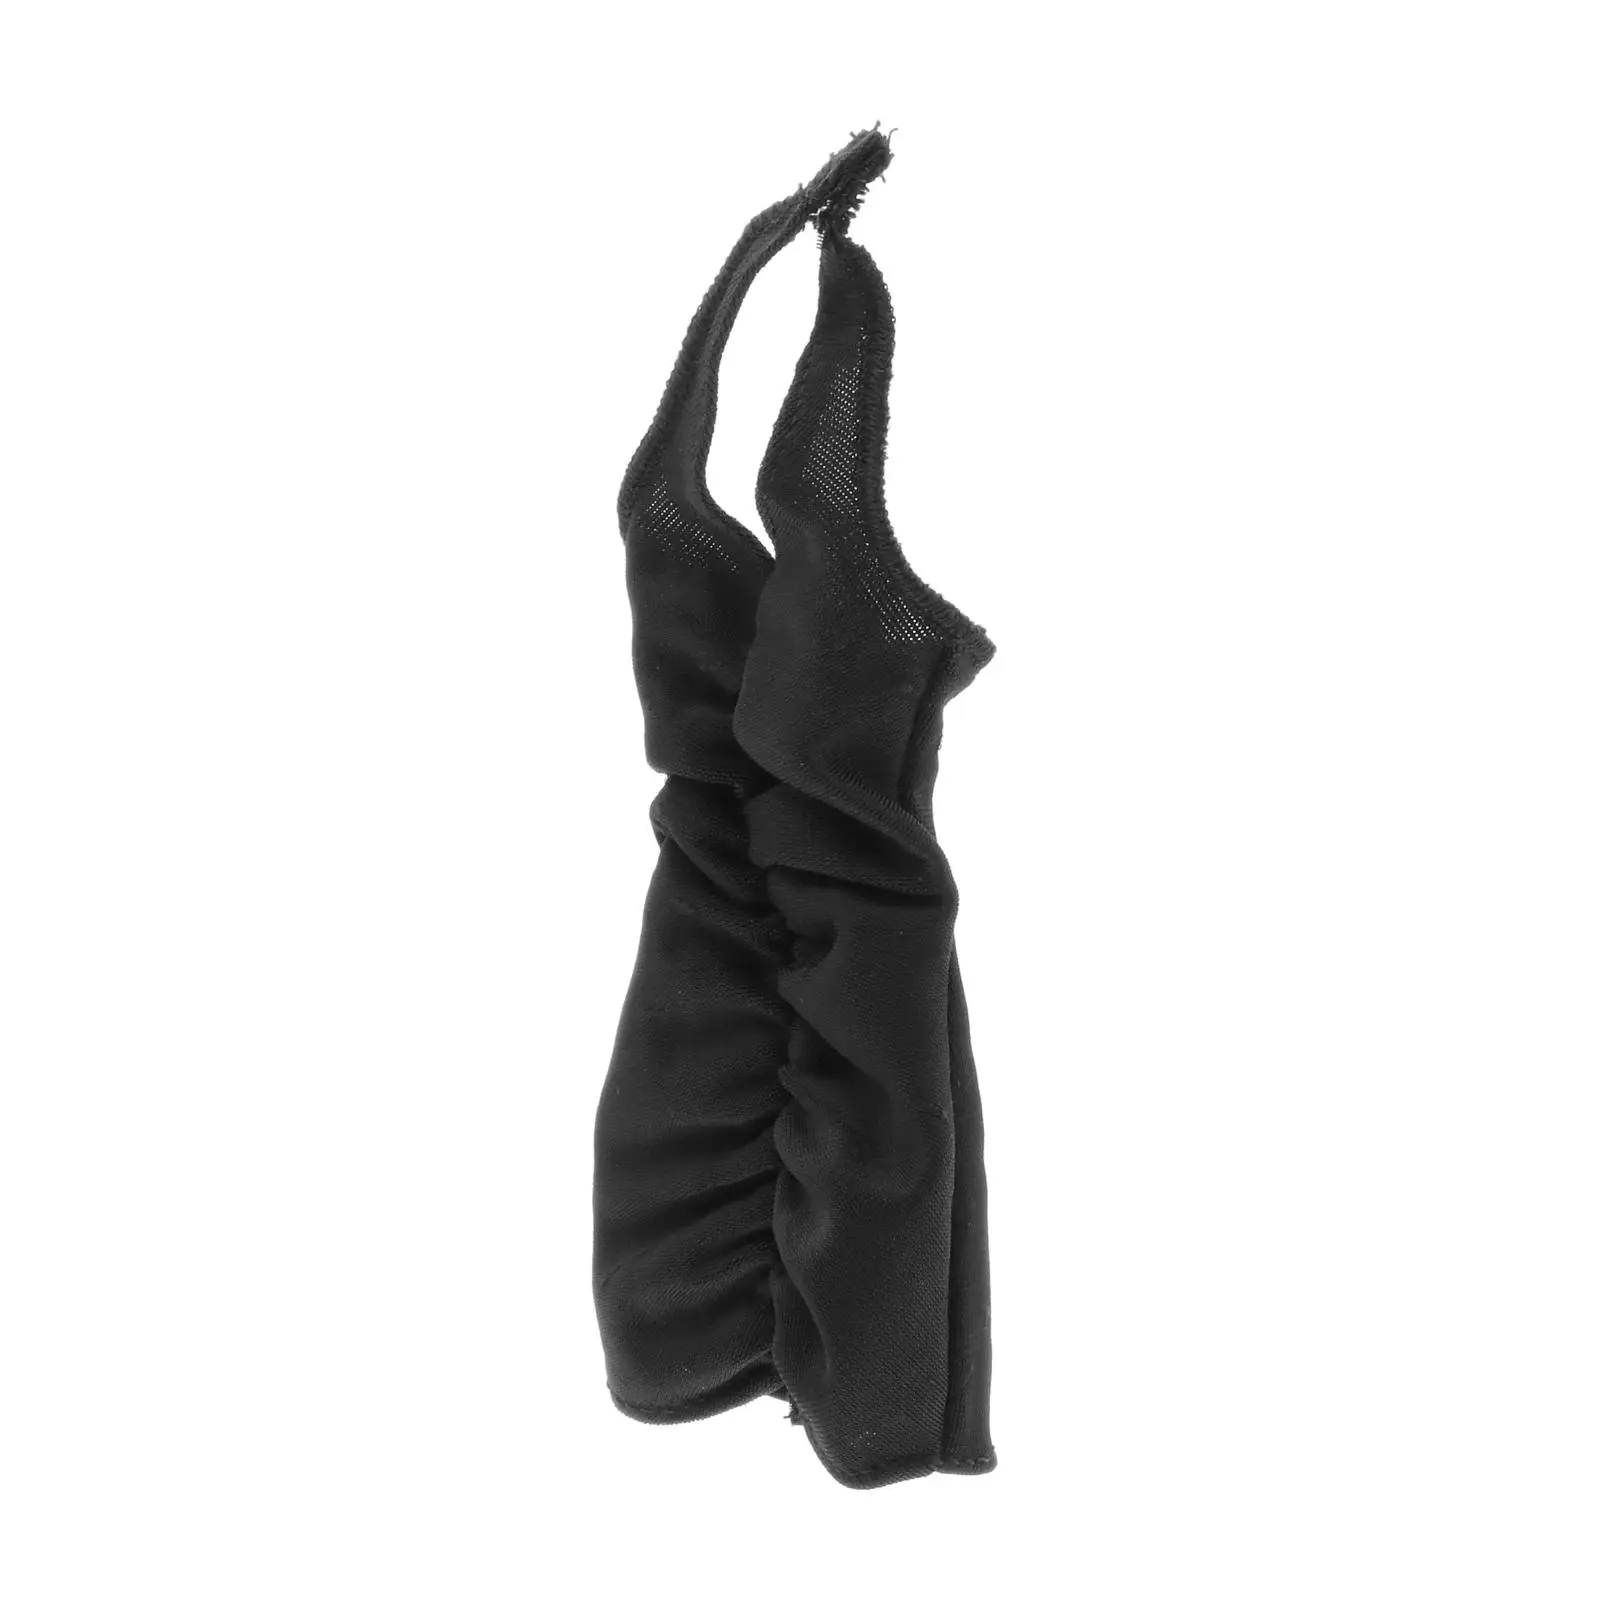 1/6 Scale Black Short Dress Skirt for 12 Inch Action Figure Women Body